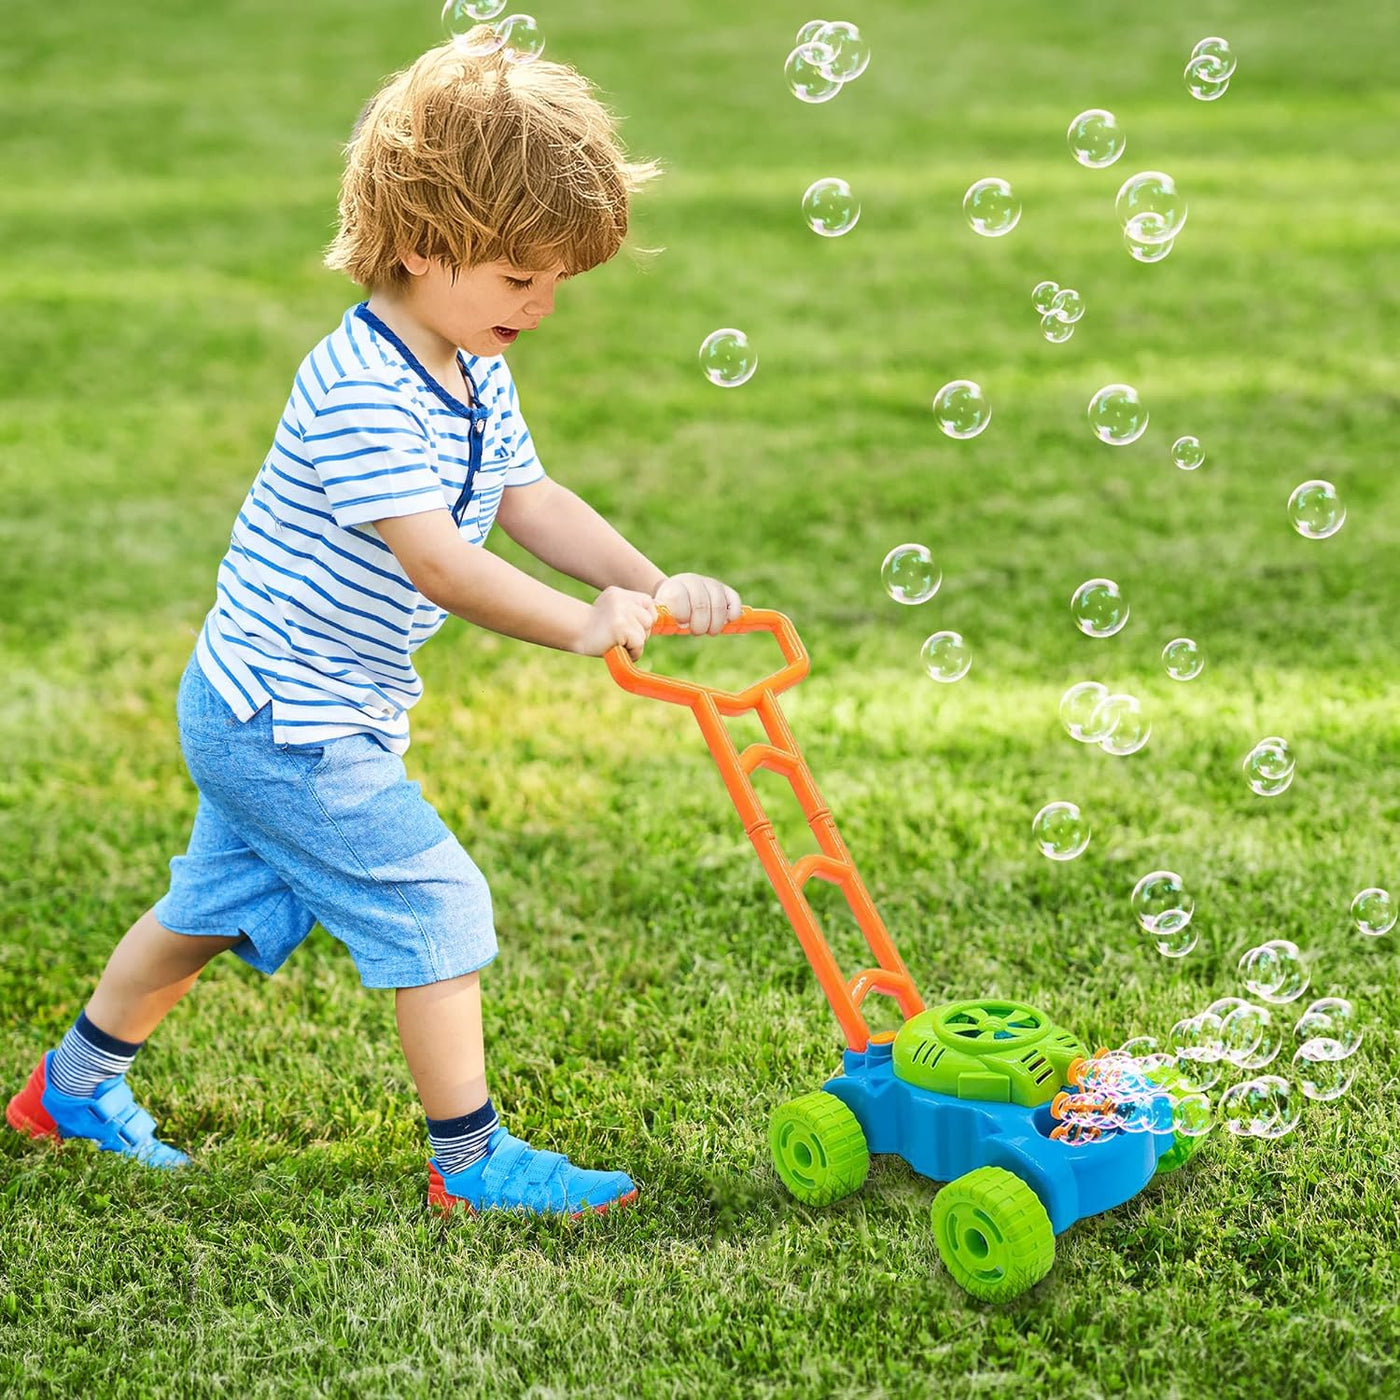  Maxx Bubbles Deluxe Bubble Lawn Mower Toy – Includes